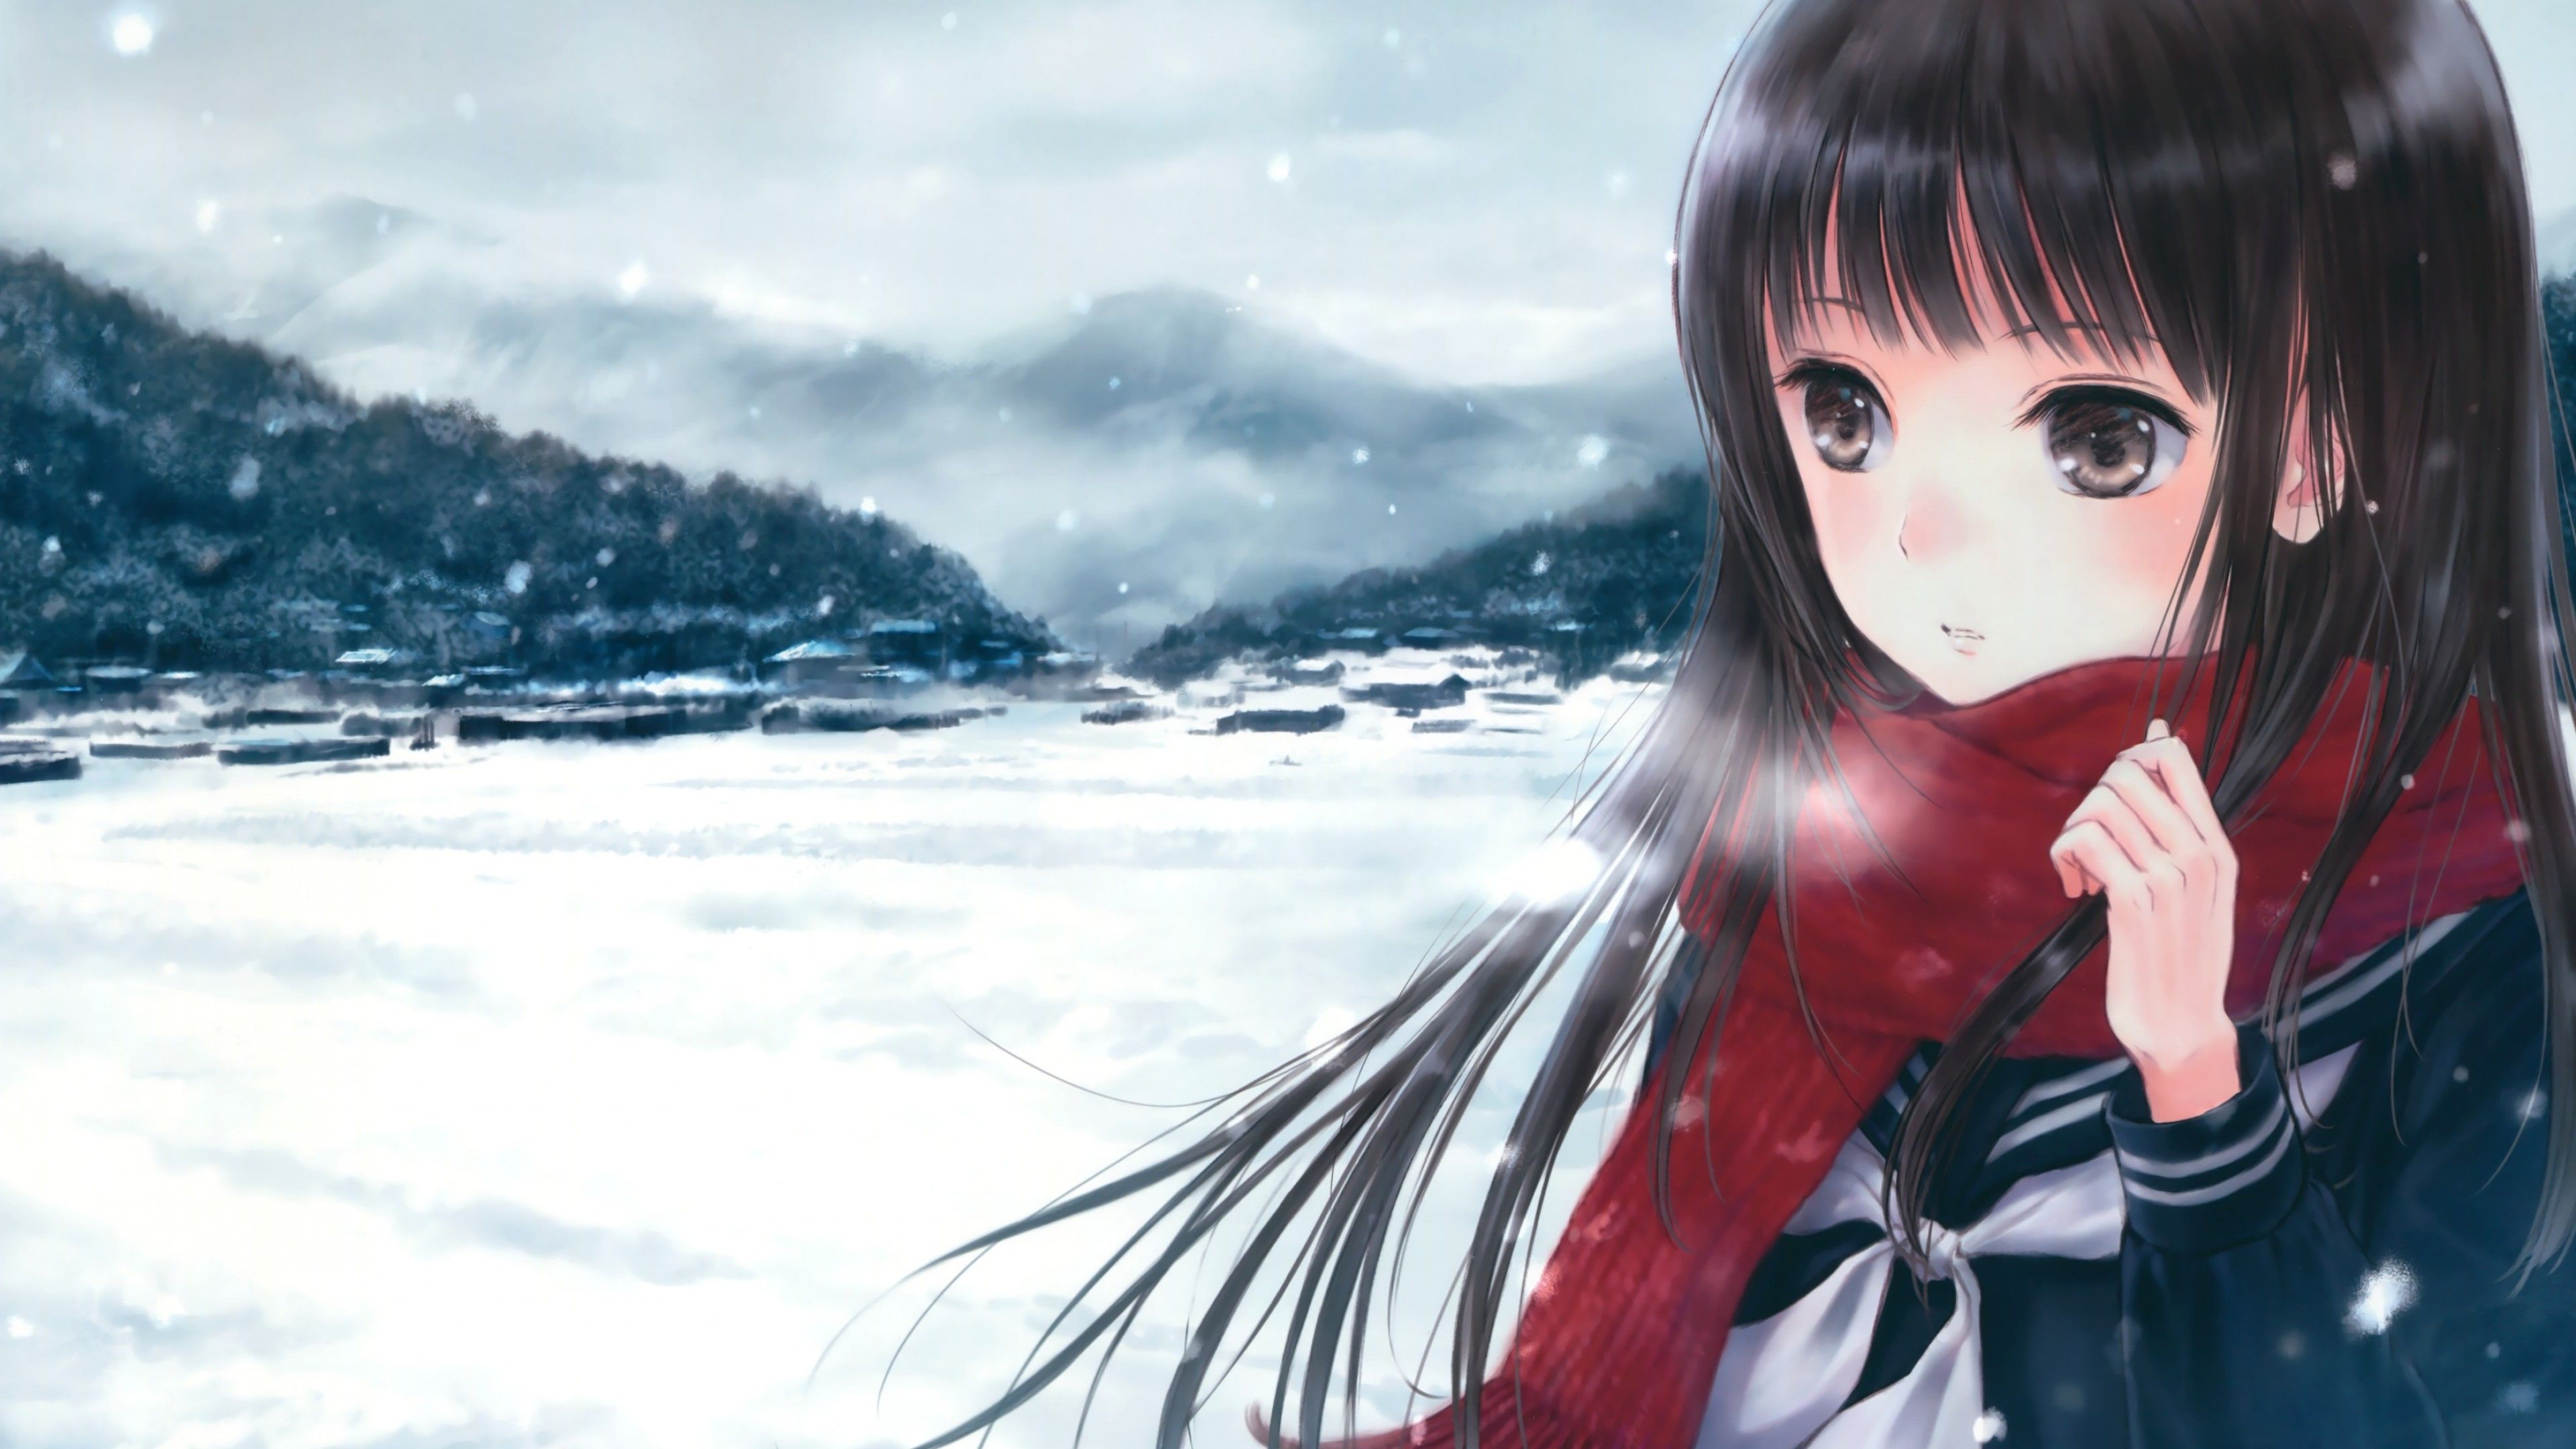 Download anime, girl, beauty, winter, 4k 4K resolution 16:9 ratio wallpaper 3840x2160